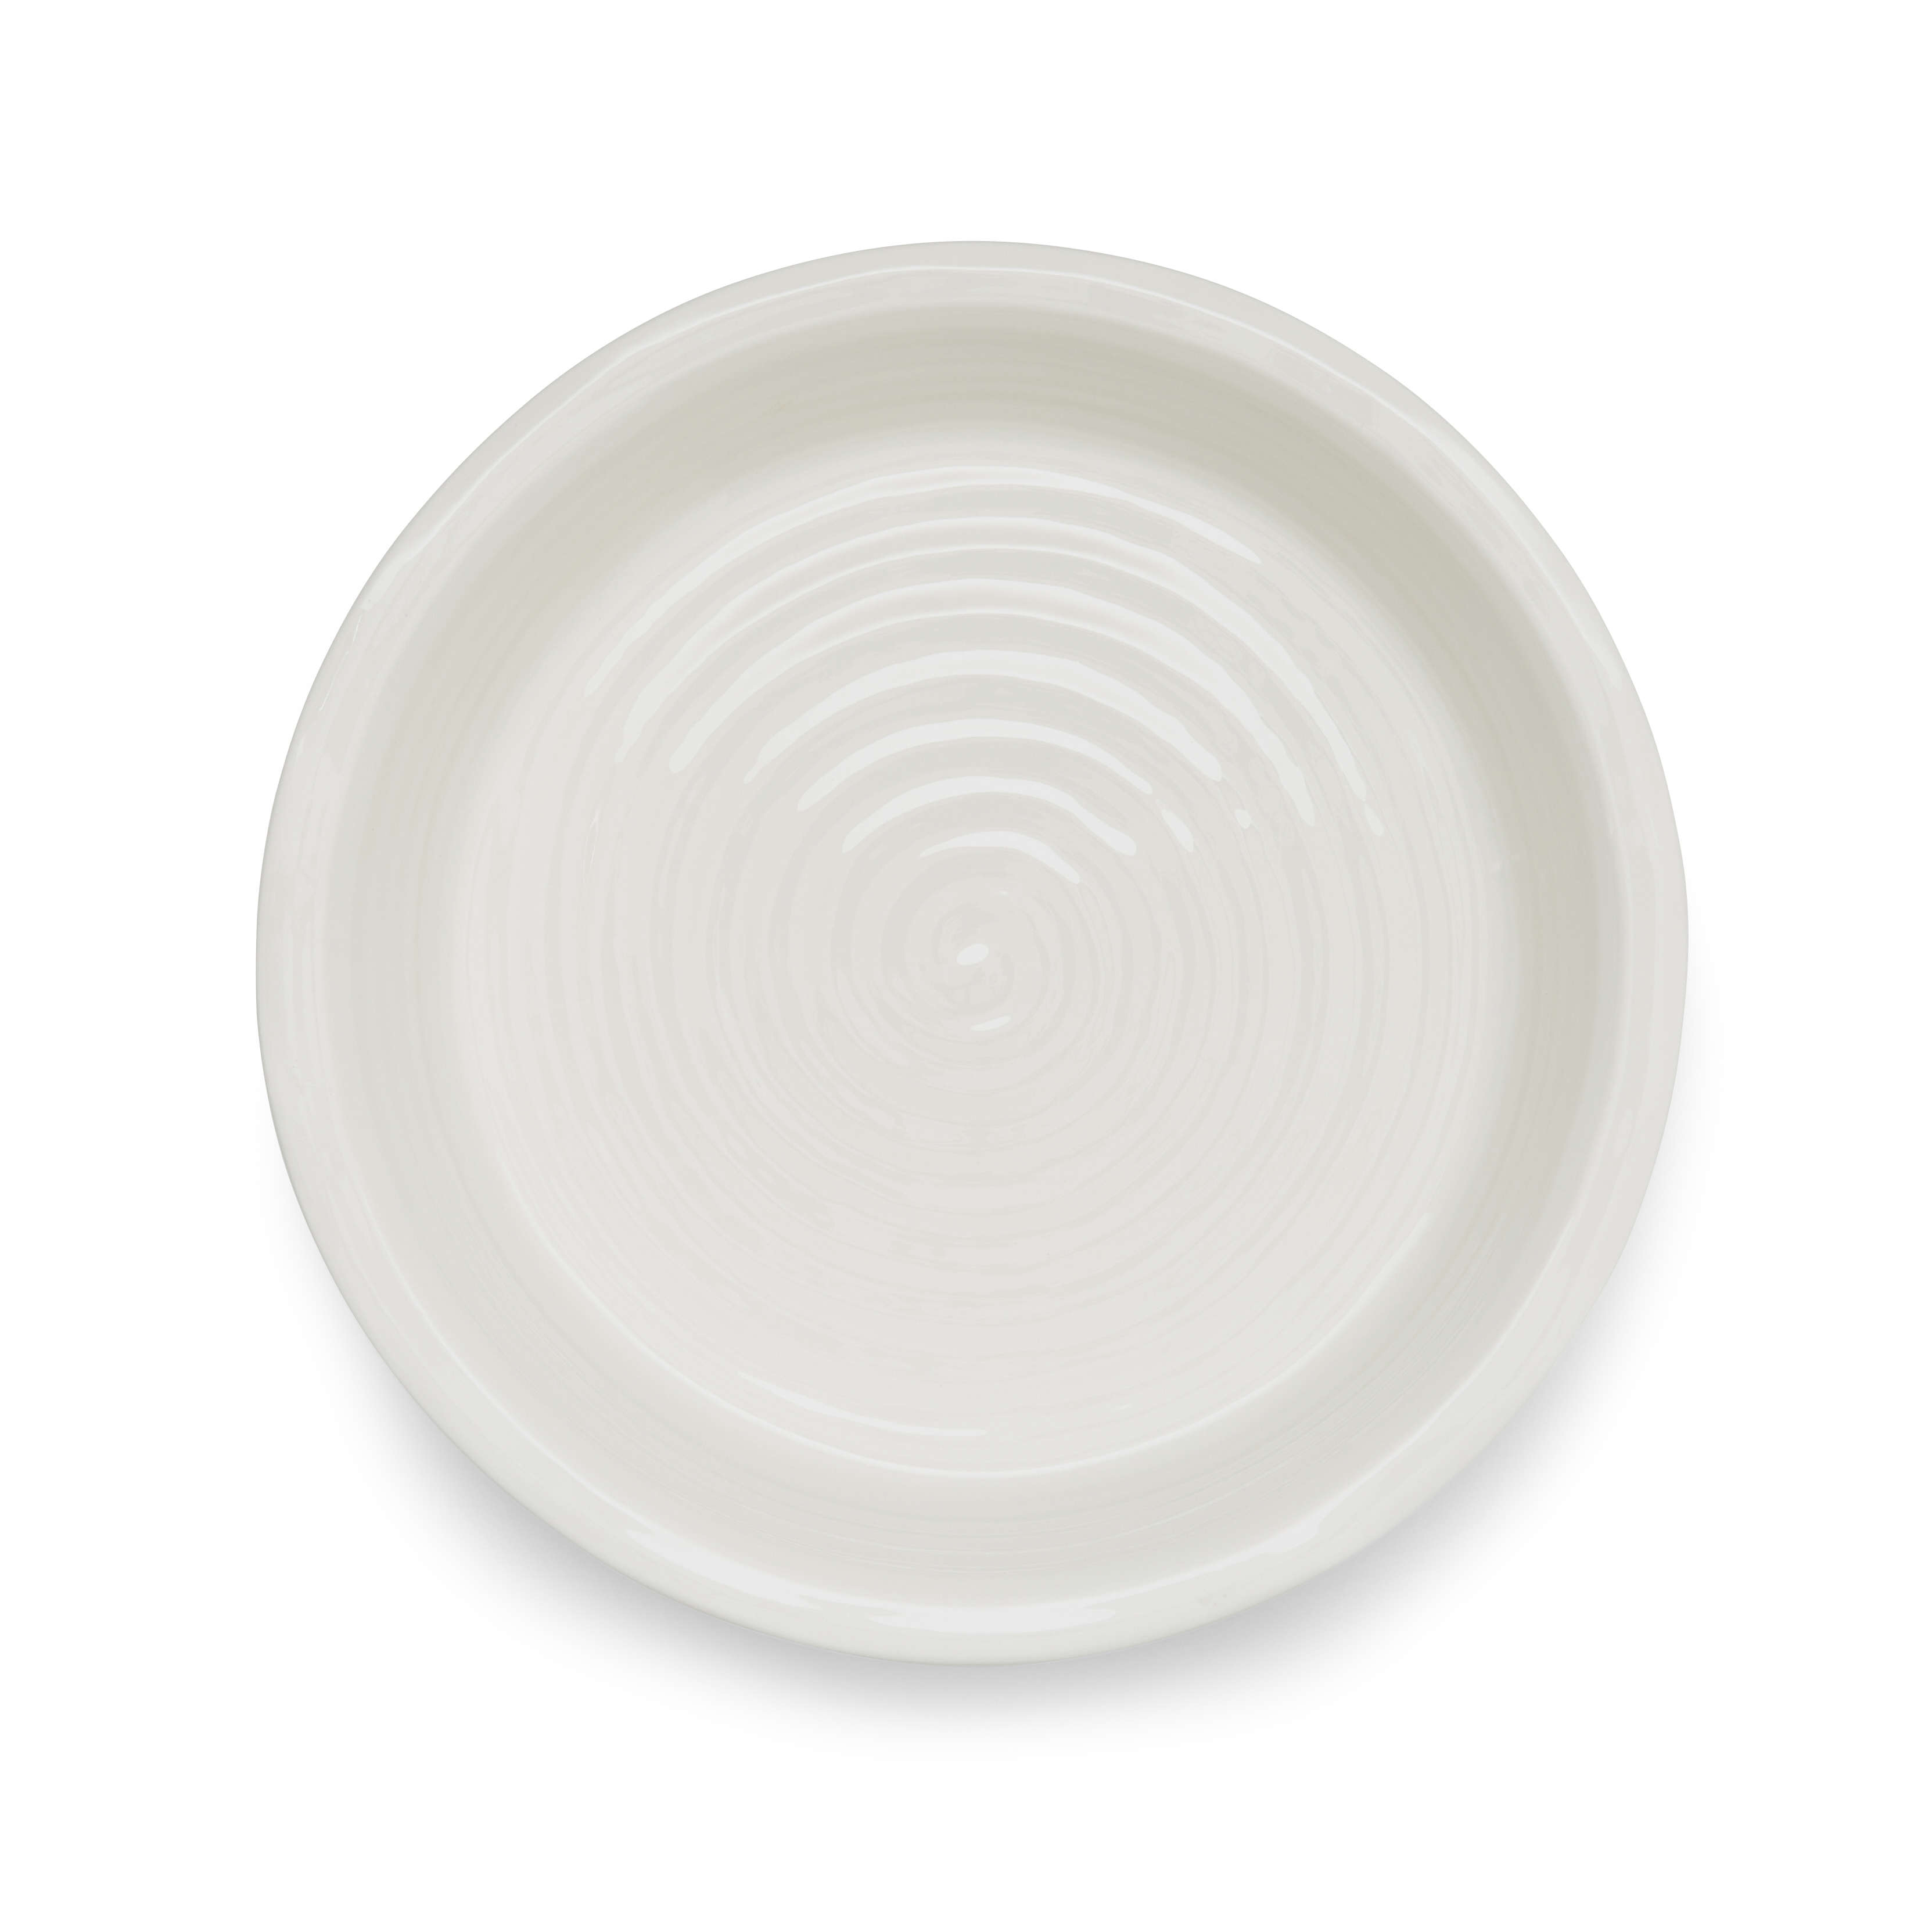 Sophie Conran Round Pie Dish, White image number null